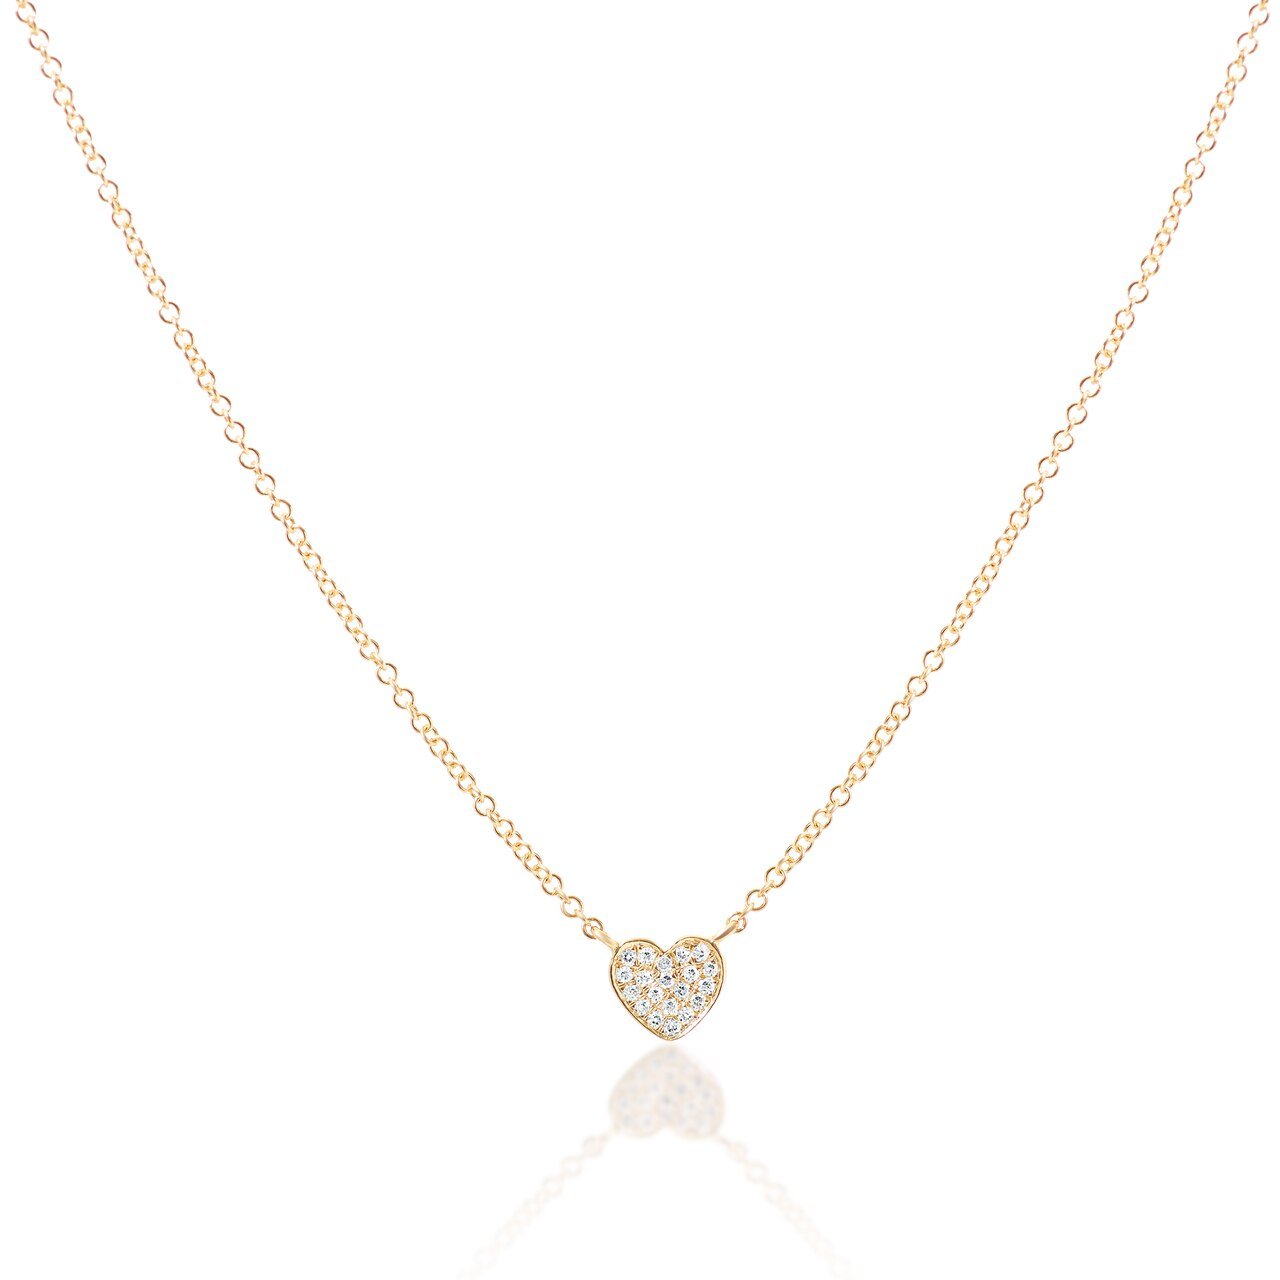 Heart-shaped Jewelry Trends: Are Hearts Pendants Still Trendy?